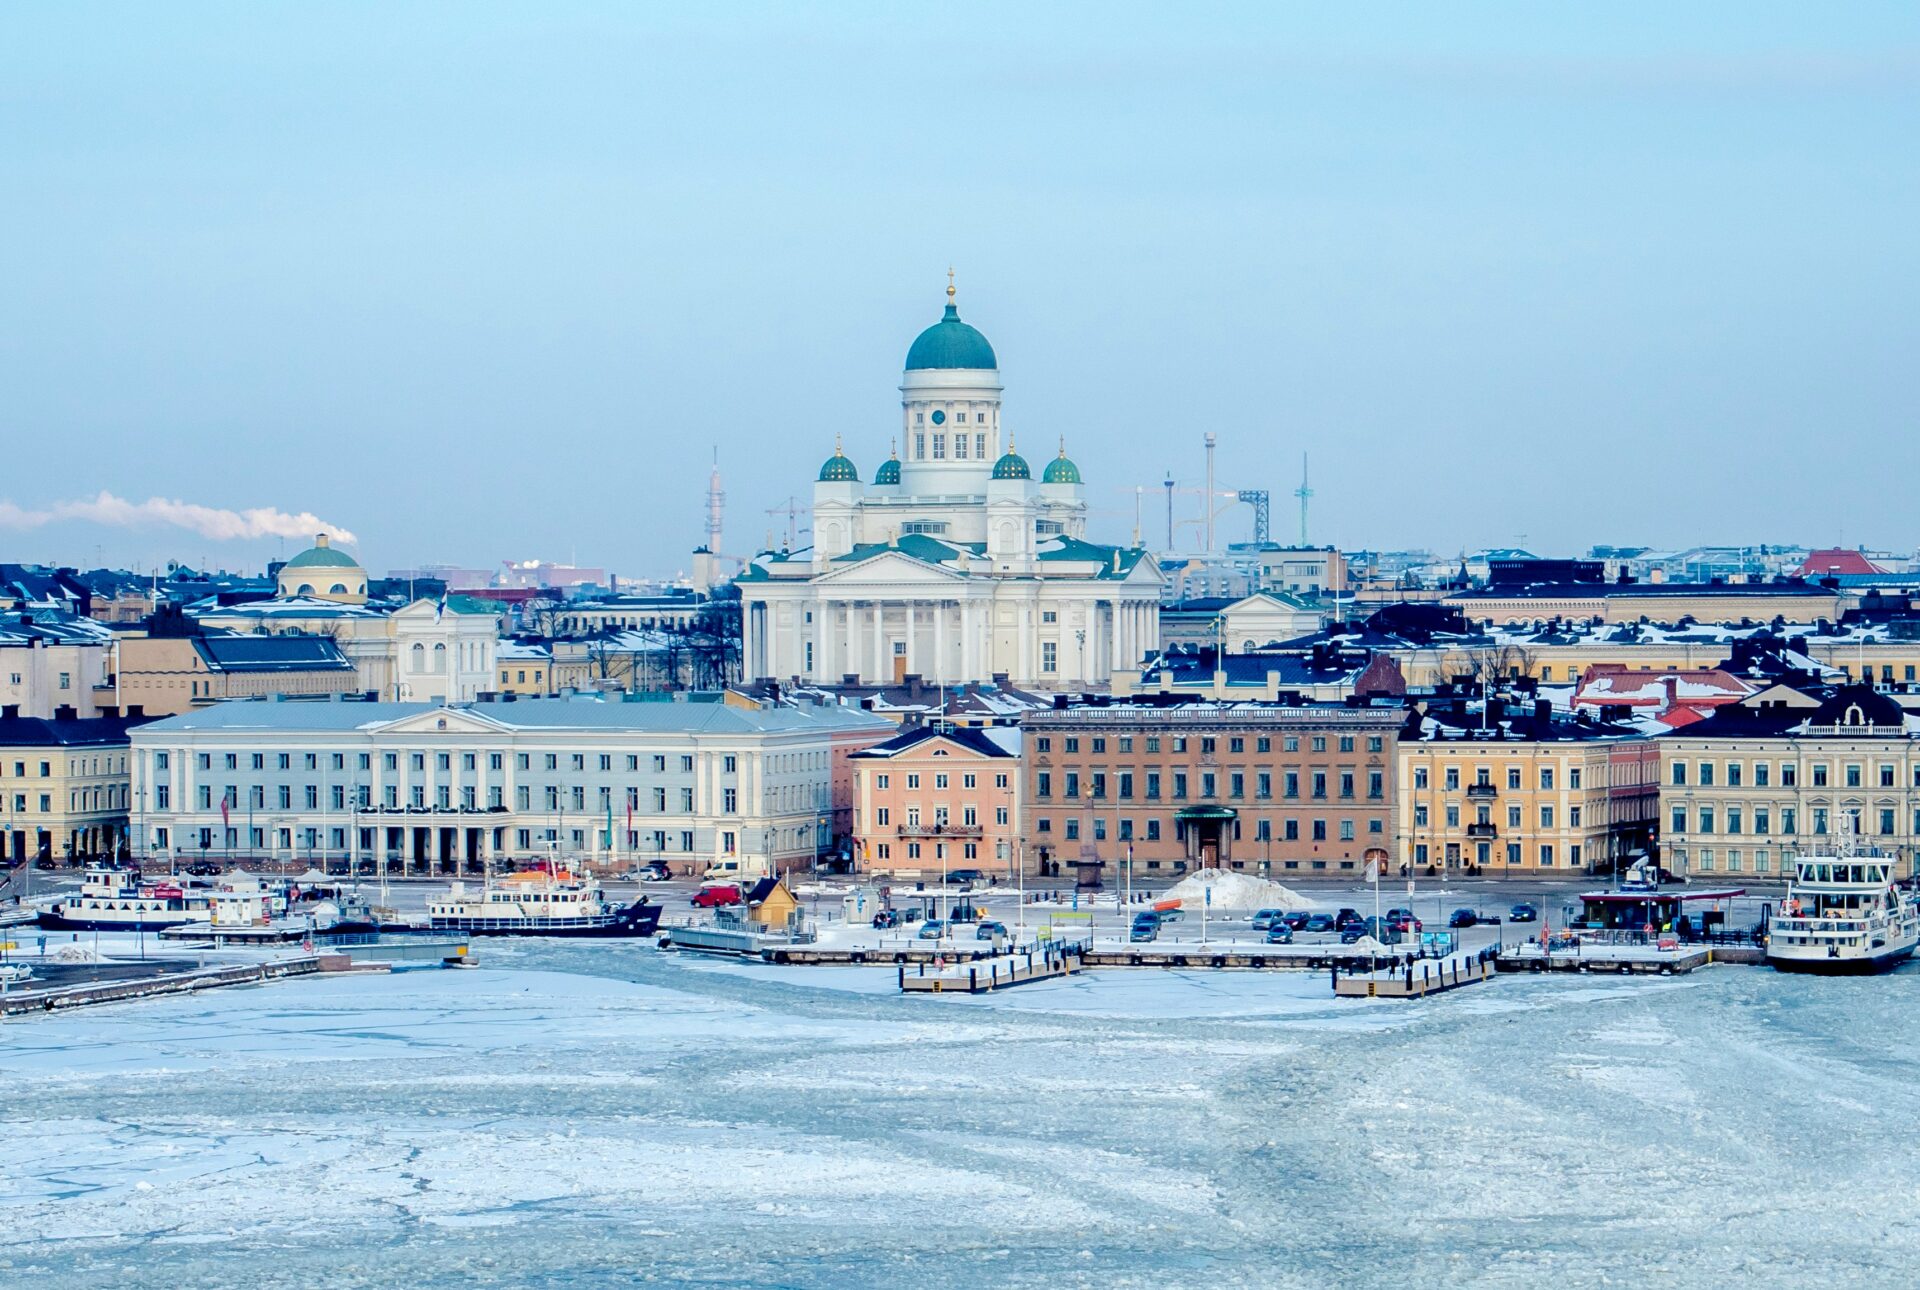 Helsinki during winter